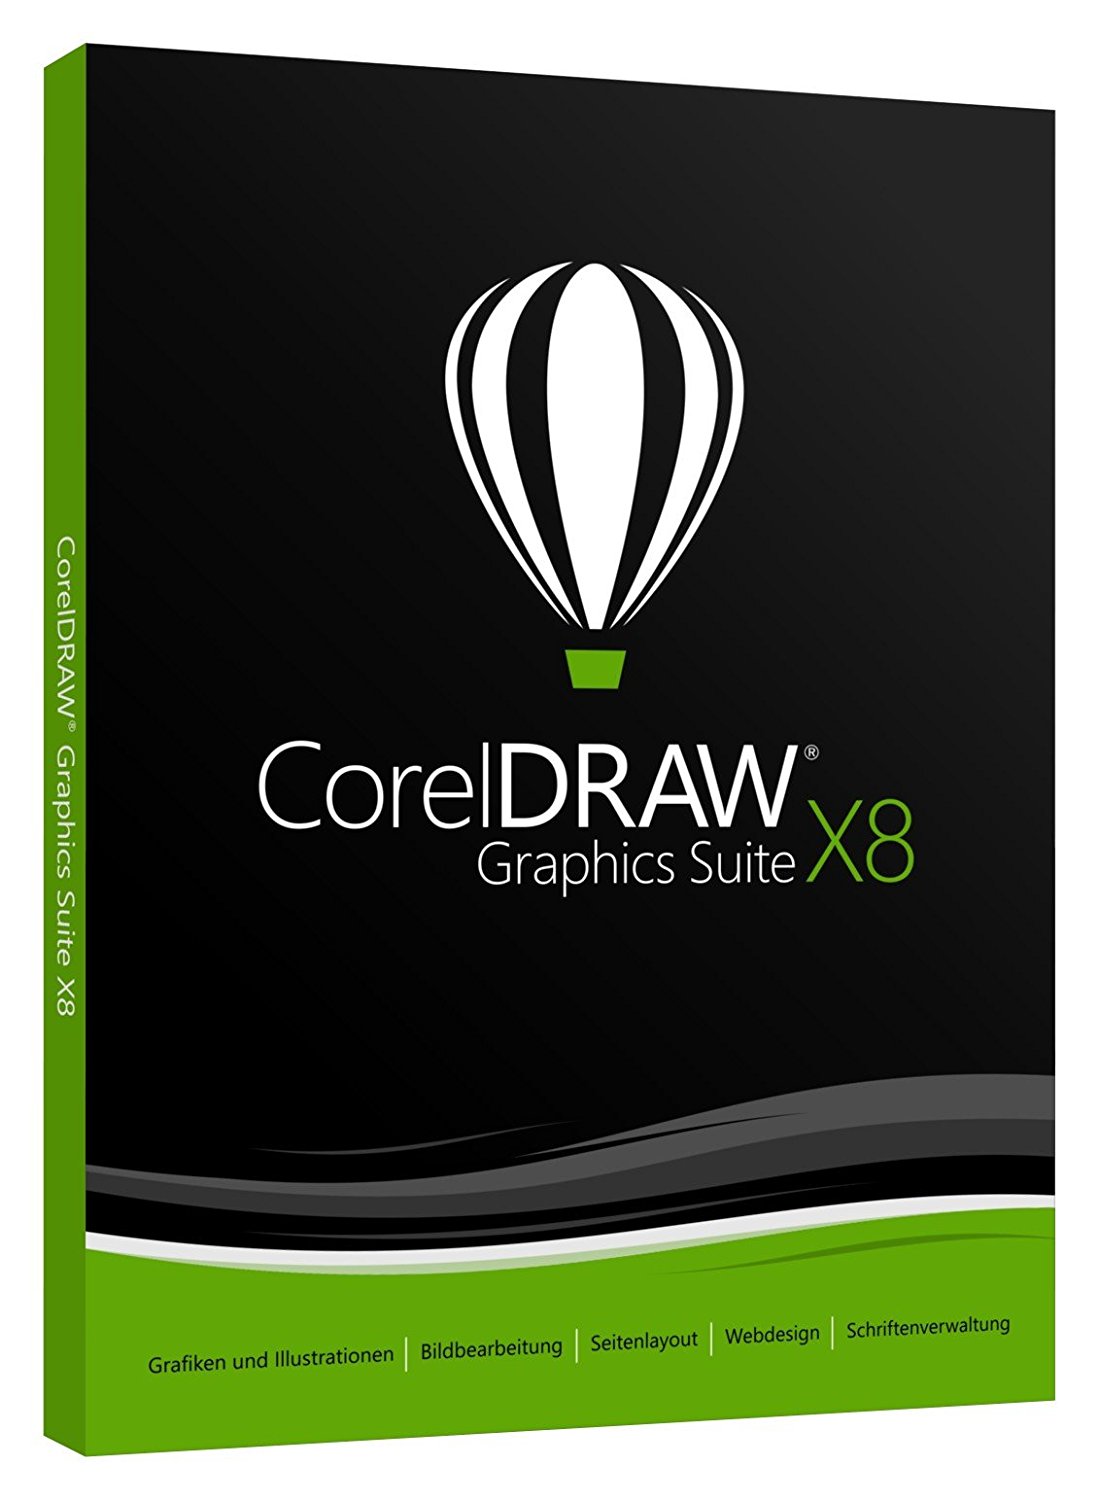 coreldraw x8 trial version free download